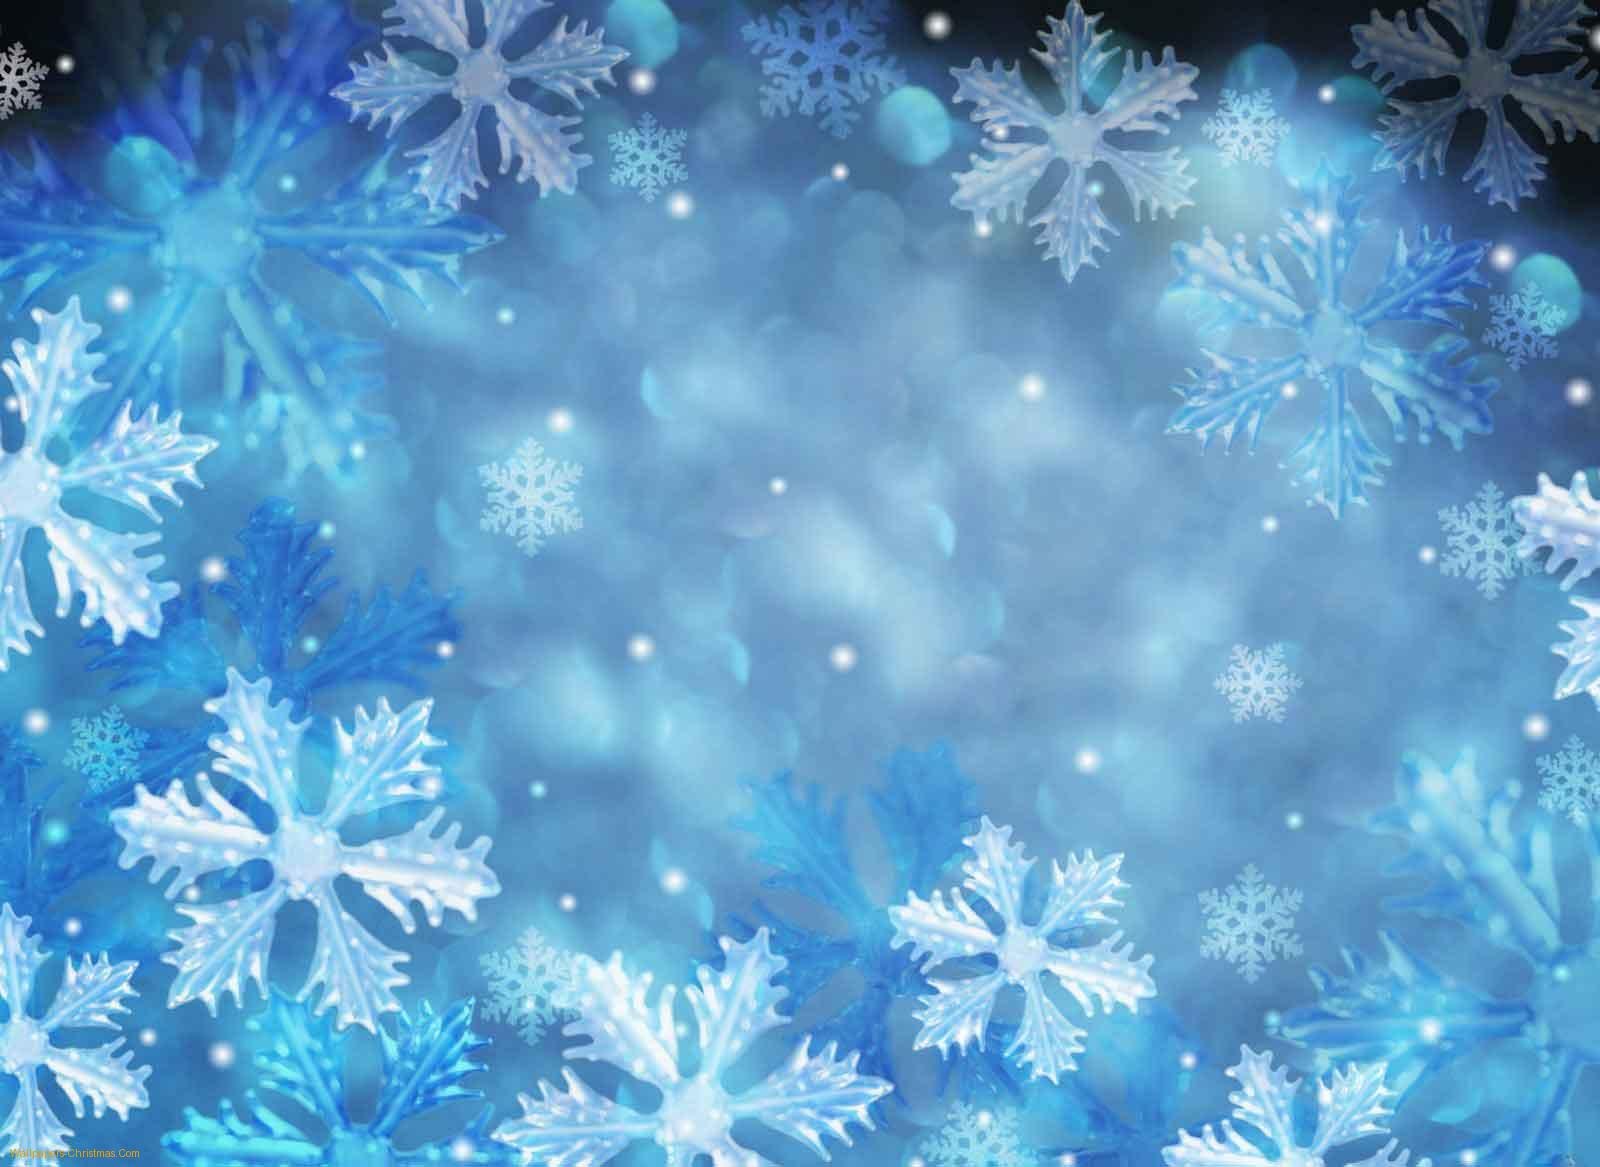 Christmas Snow Wallpaper Hd Christmas snow wallpaper 10479